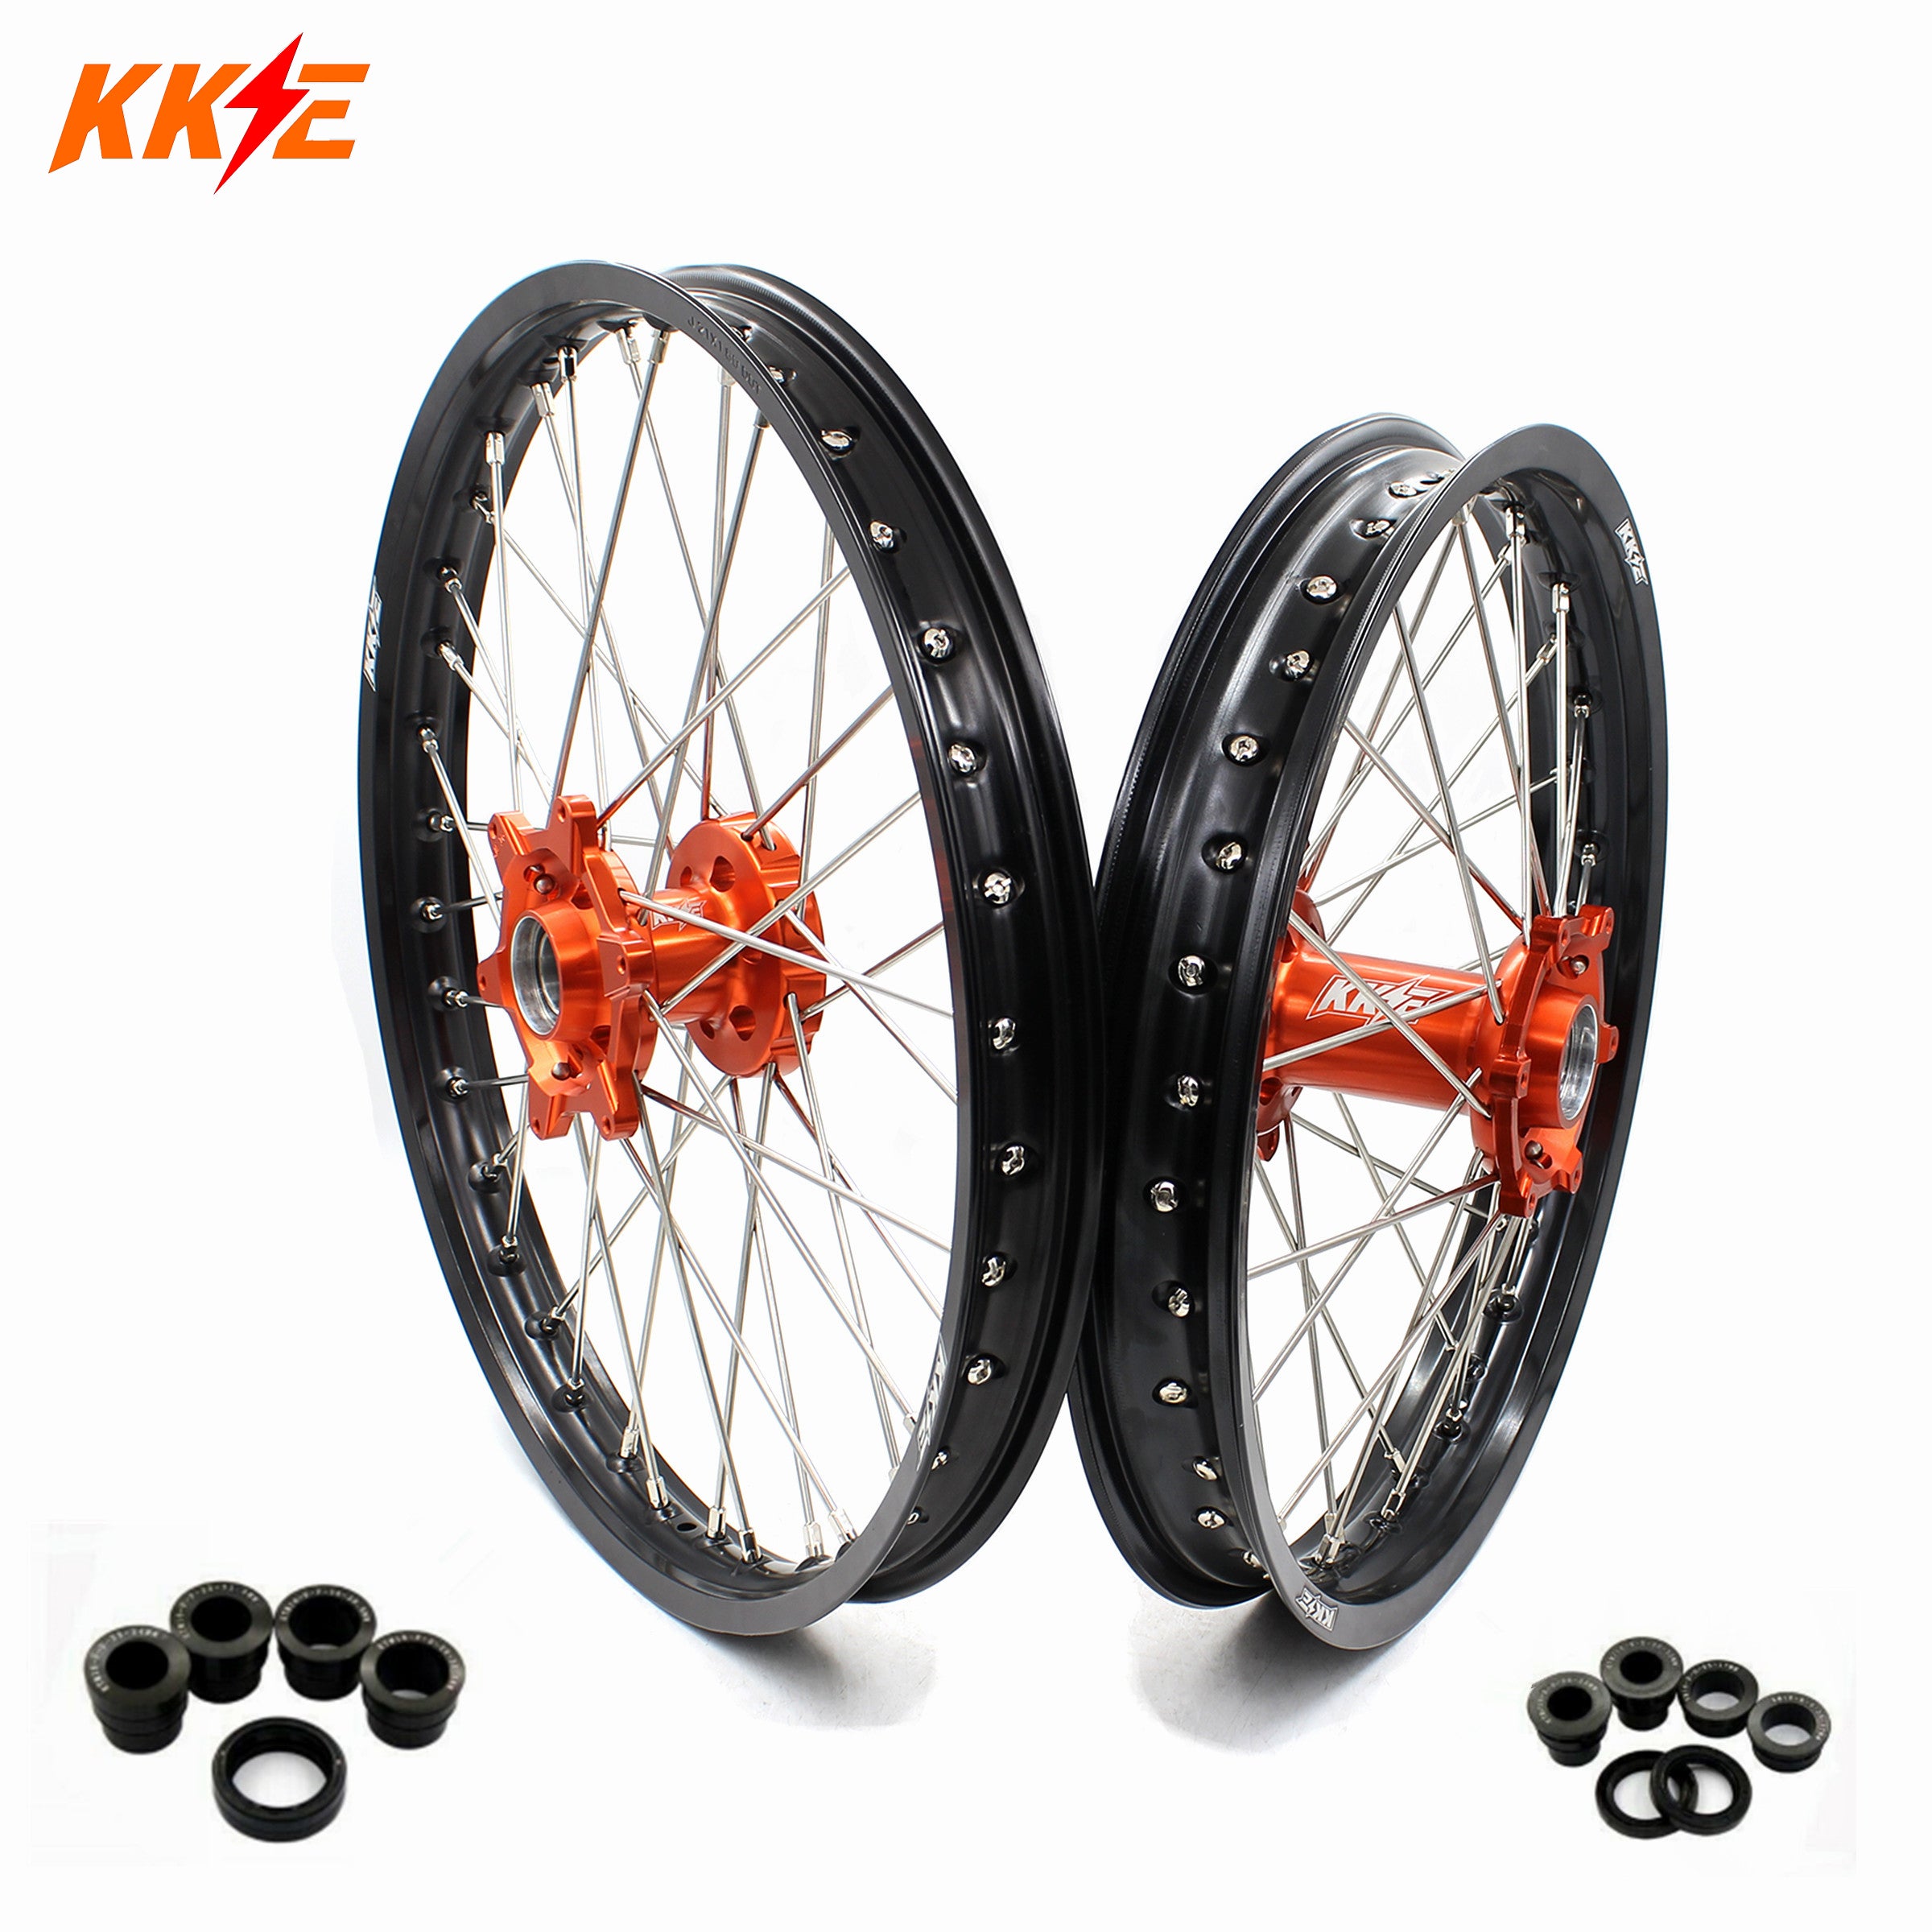 KKE MX Emduro Wheels for 125-530 All Model SXF XCF XCW EXCR EXC